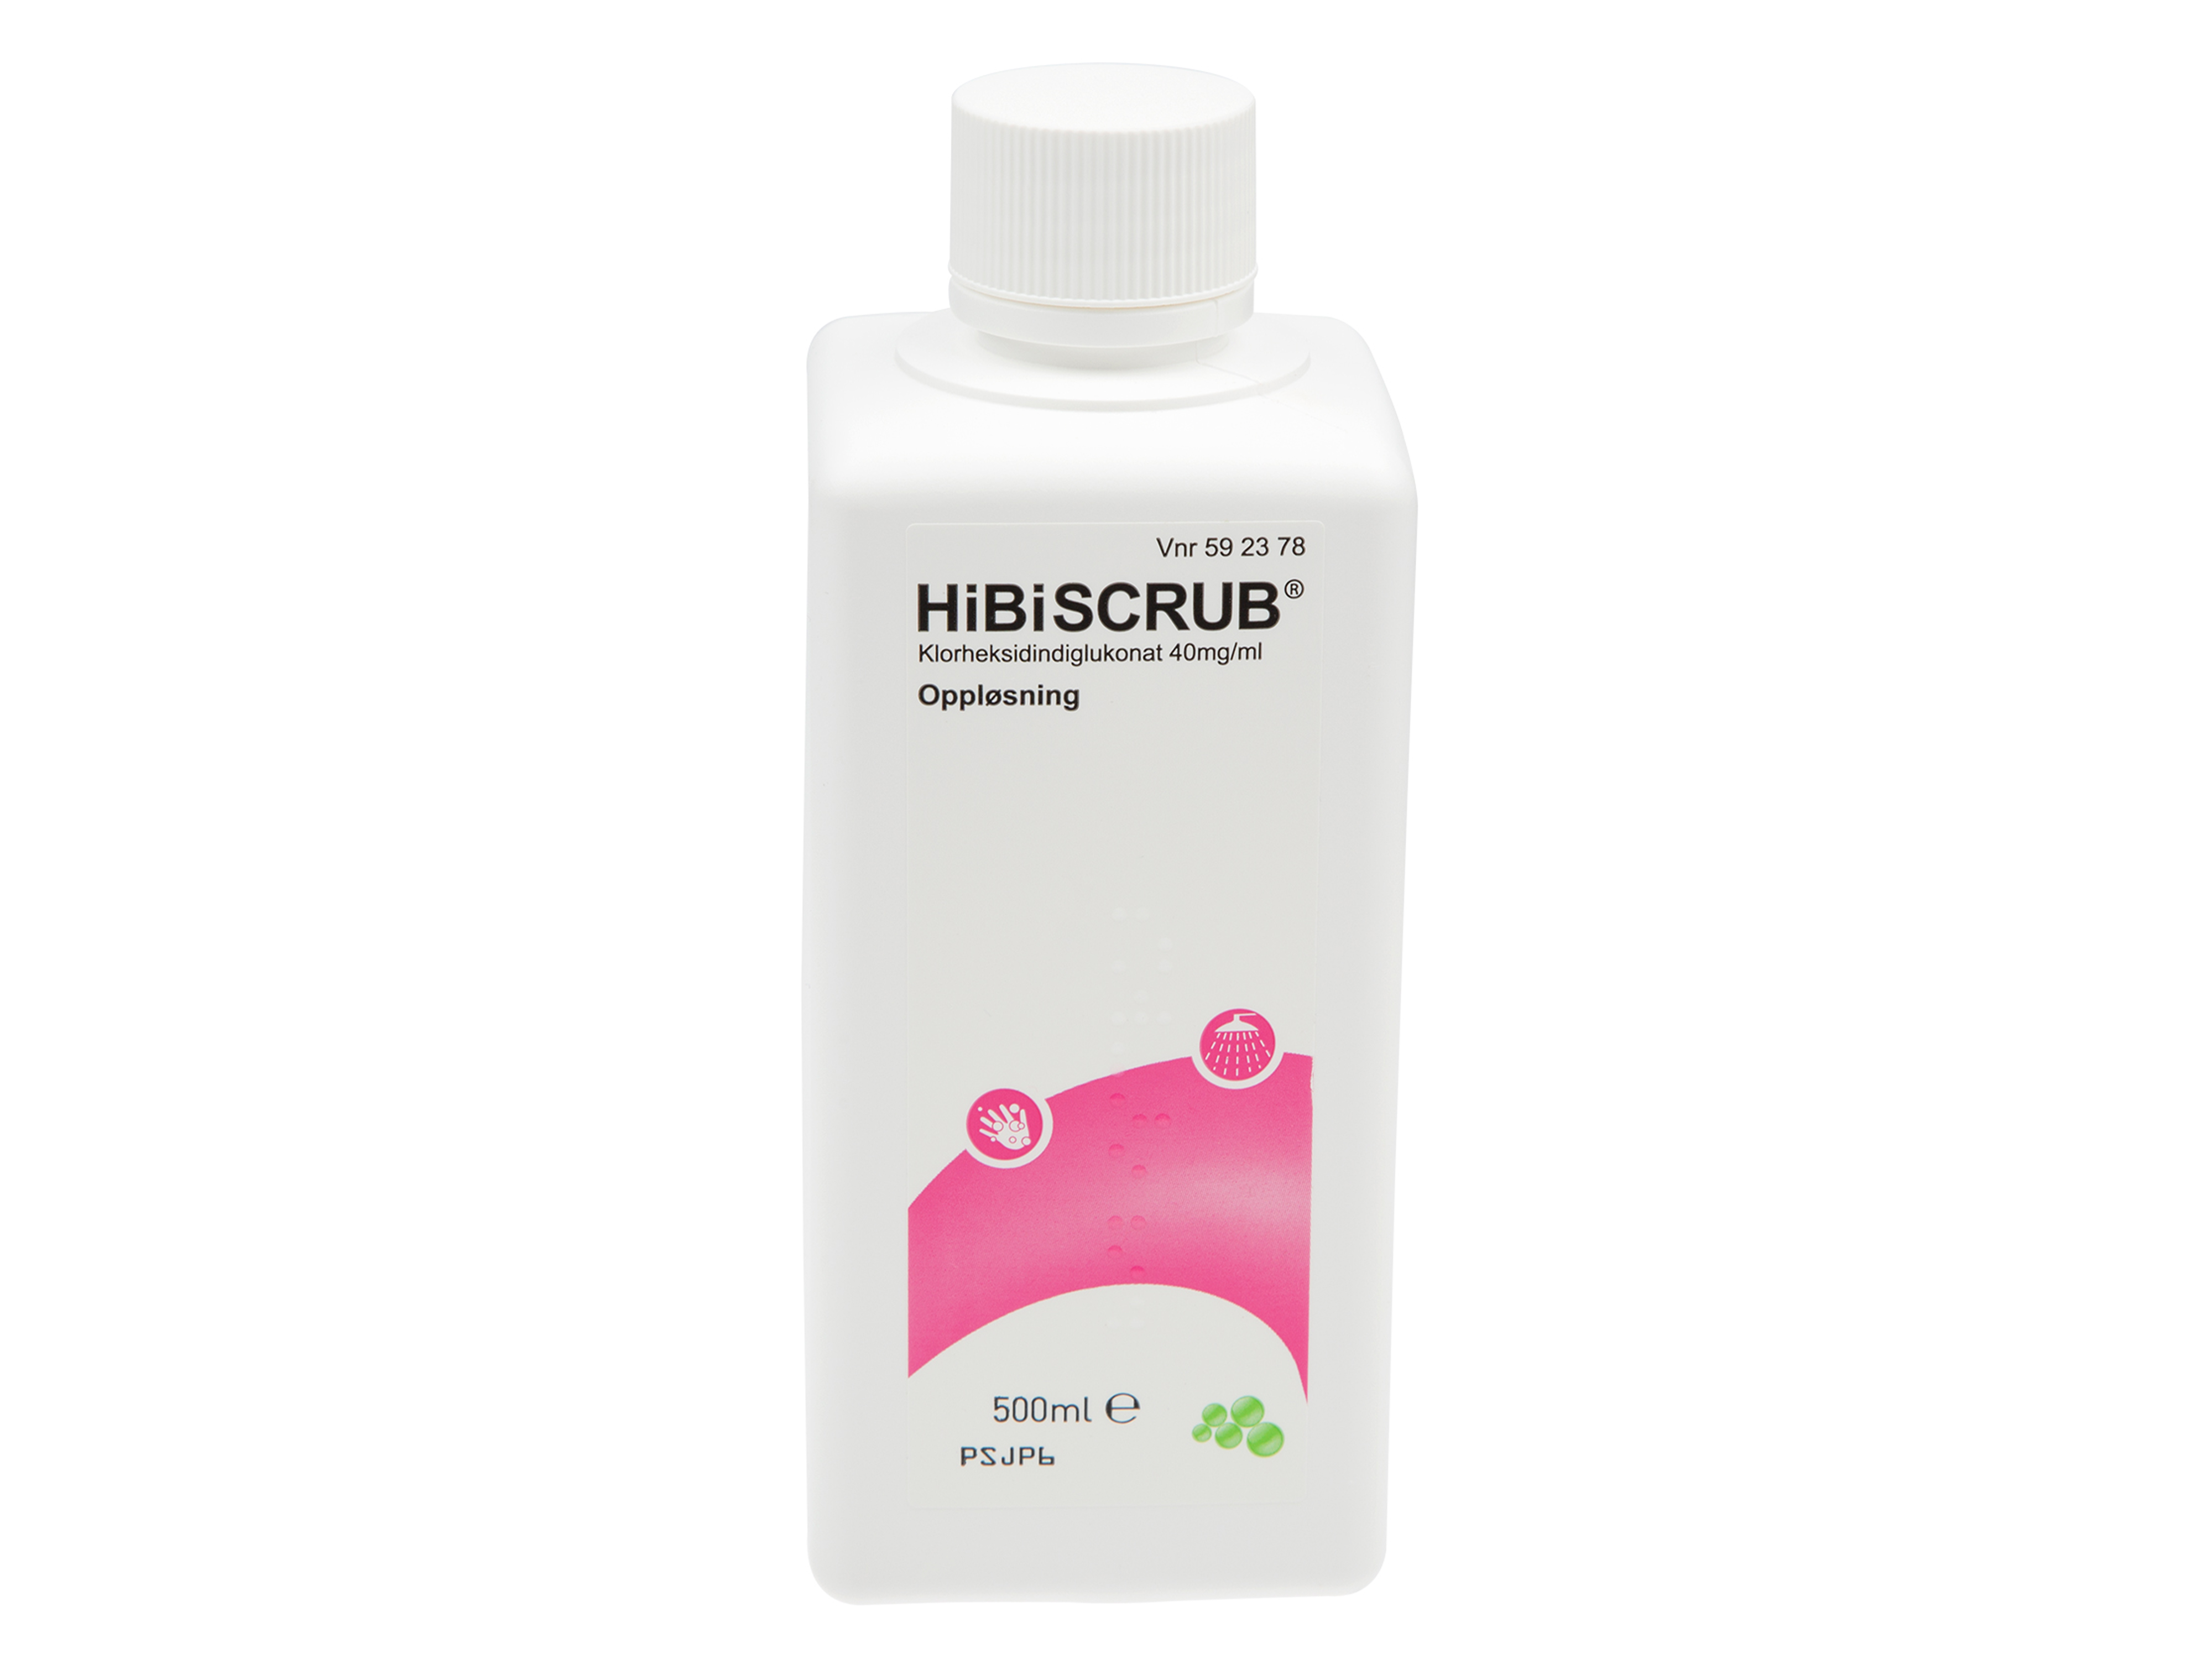 Hibiscrub Liniment 40 mg/ml, 500 ml